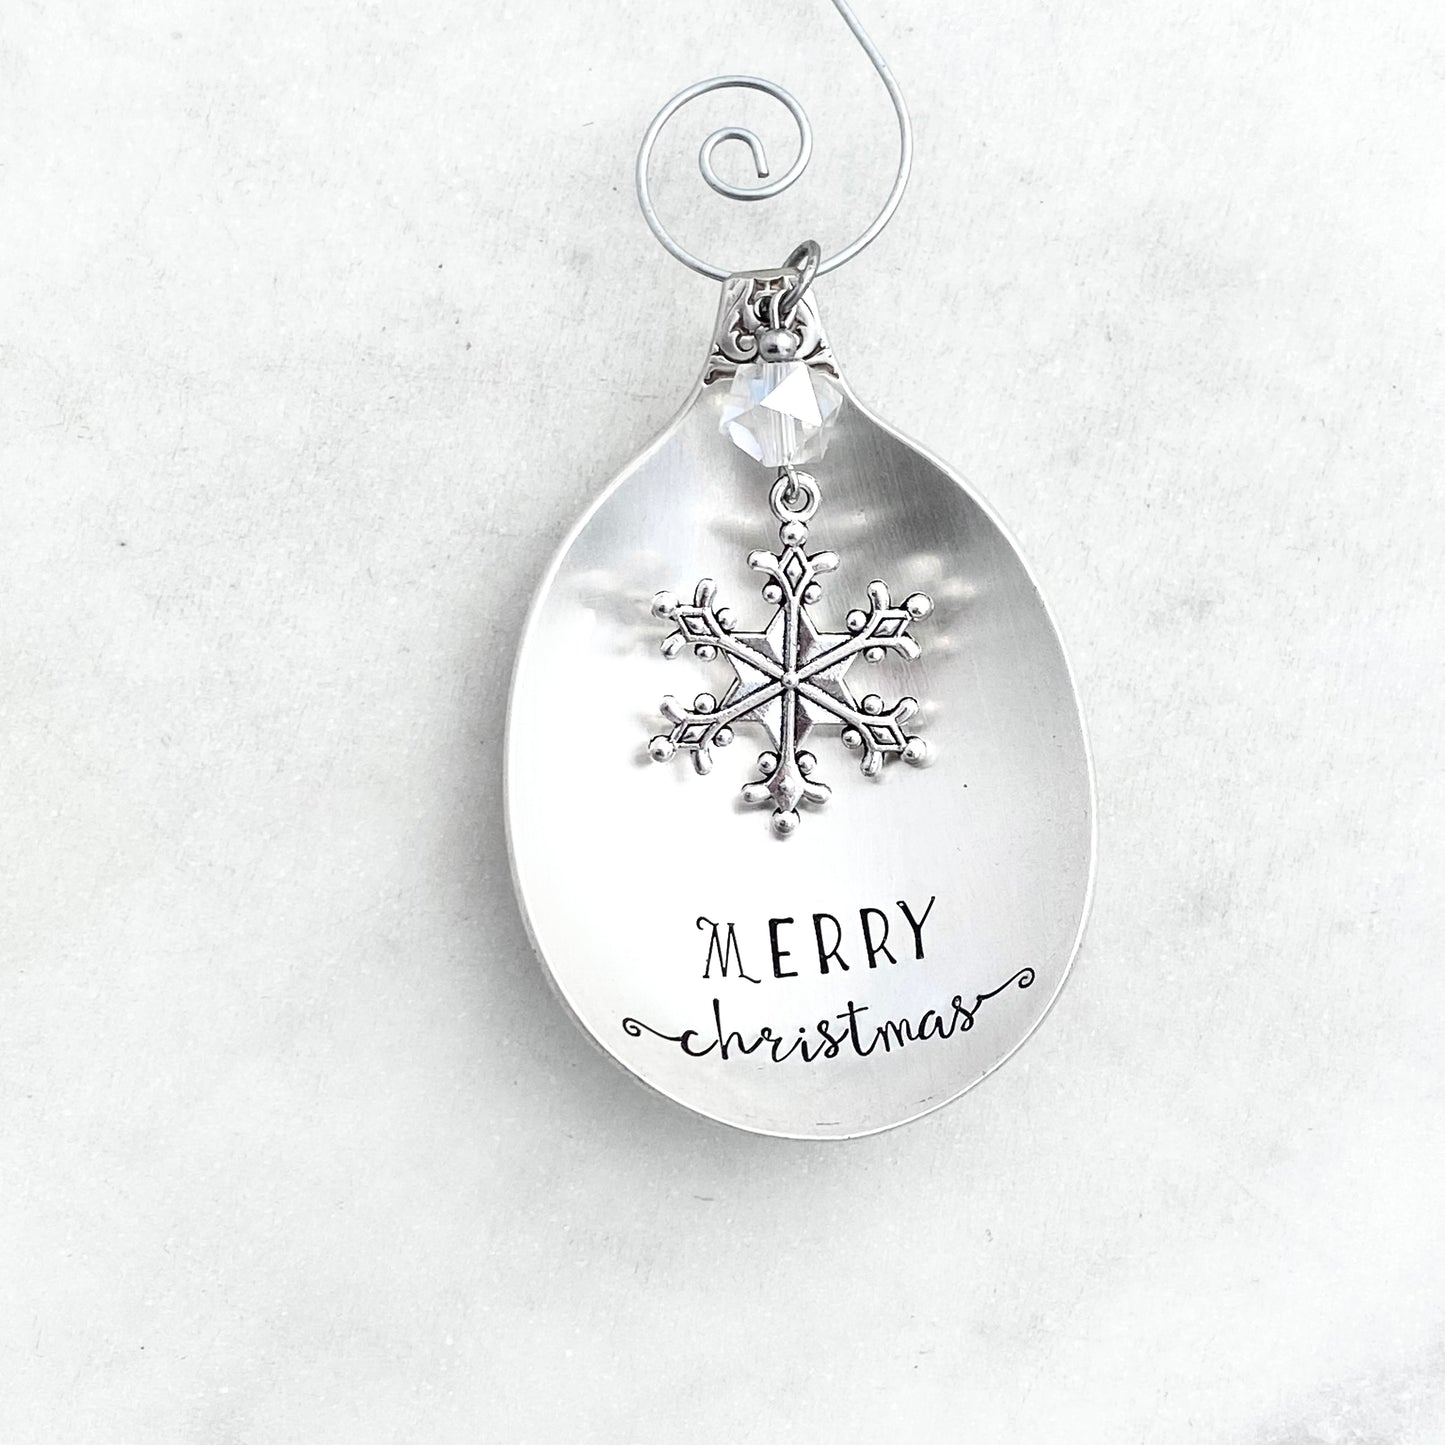 Merry Christmas, Spoon Bowl Ornament, Hand Stamped Vintage Spoon Ornament, Snowflake Ornament Ornaments callistafaye   